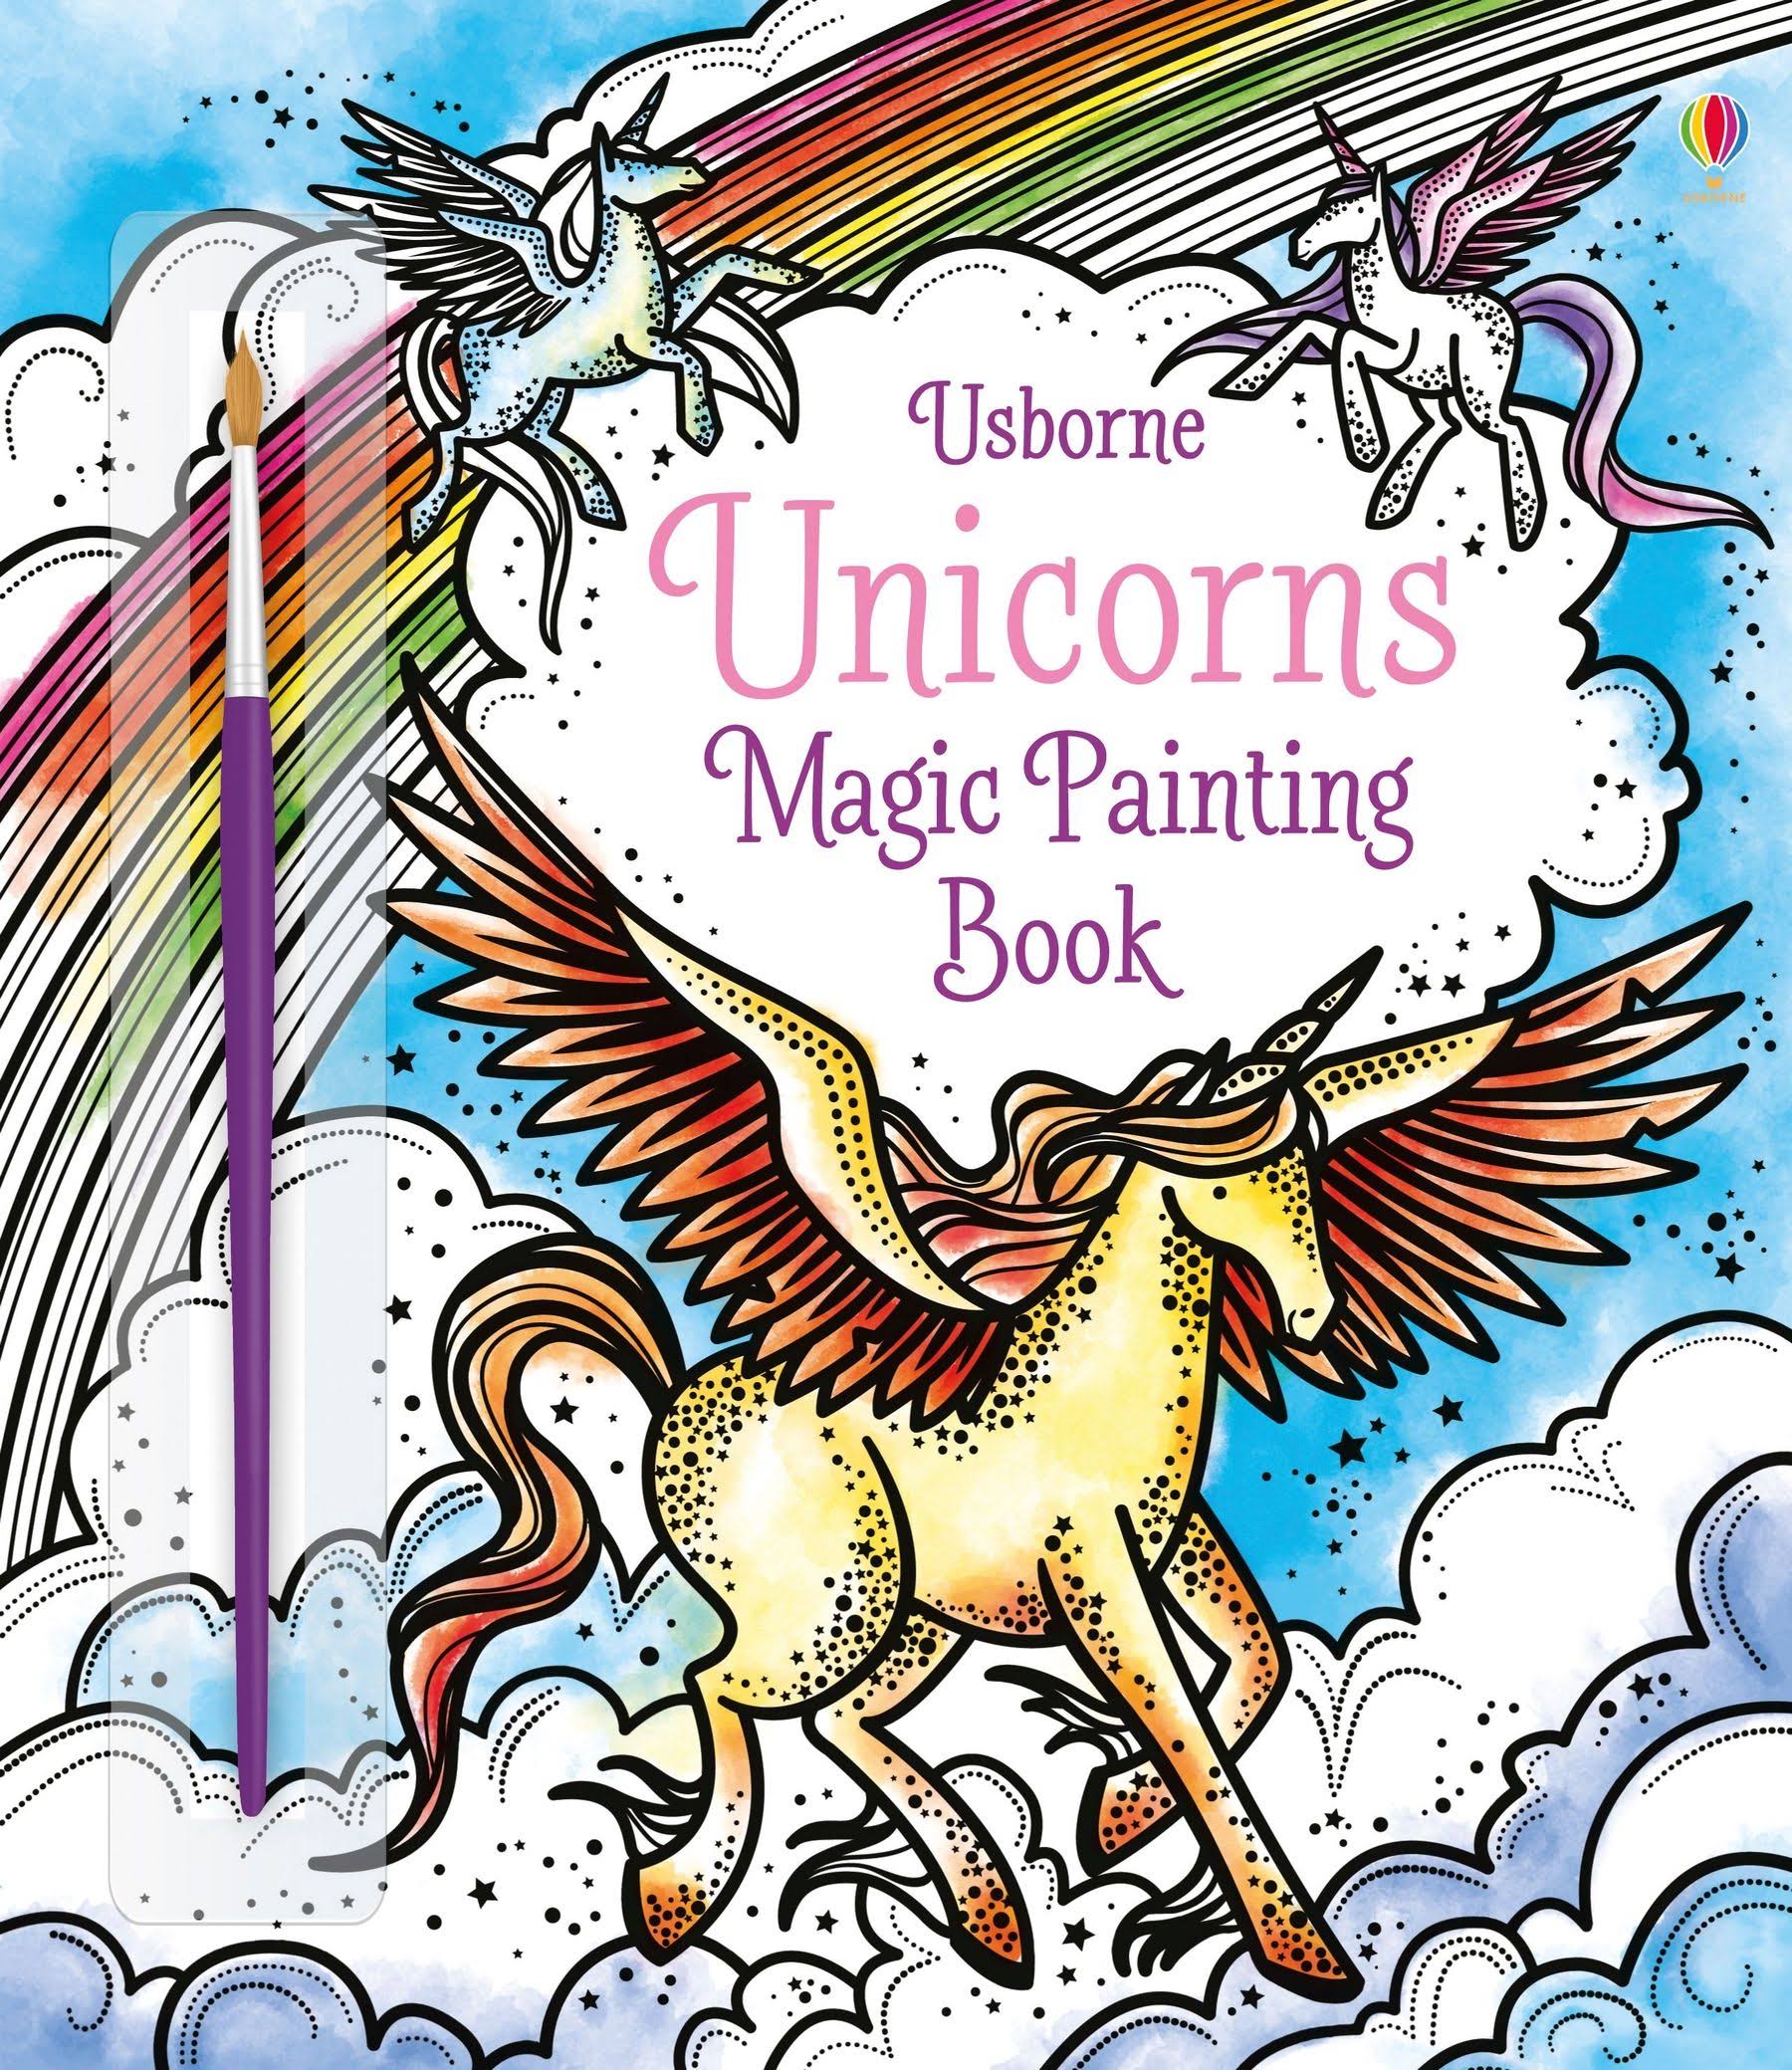 Magic Painting Unicorns [Book]